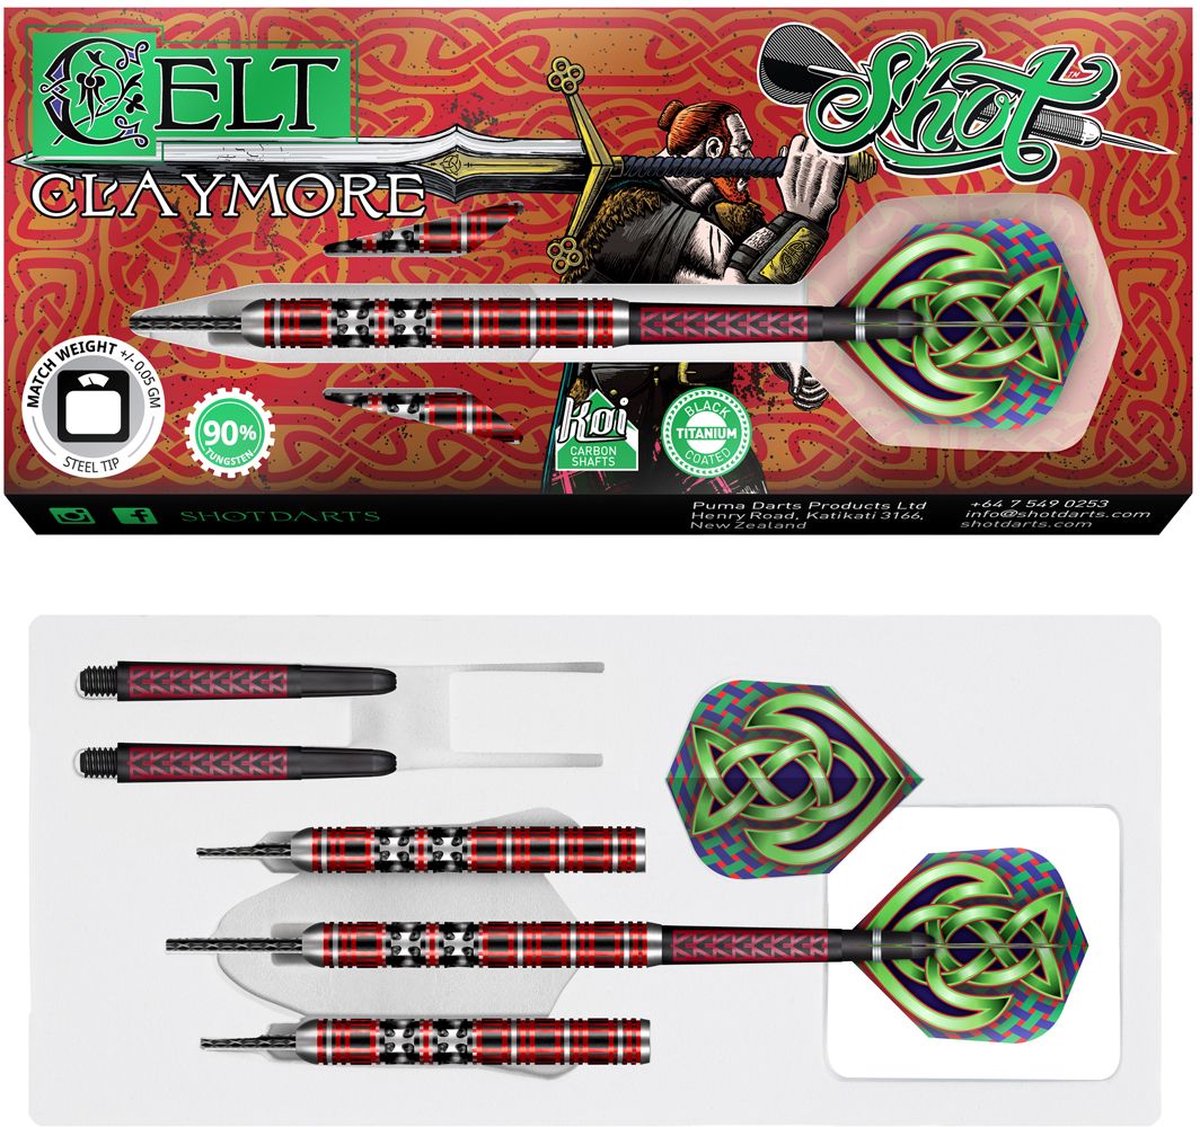 Shot Celt Claymore 90% - 25